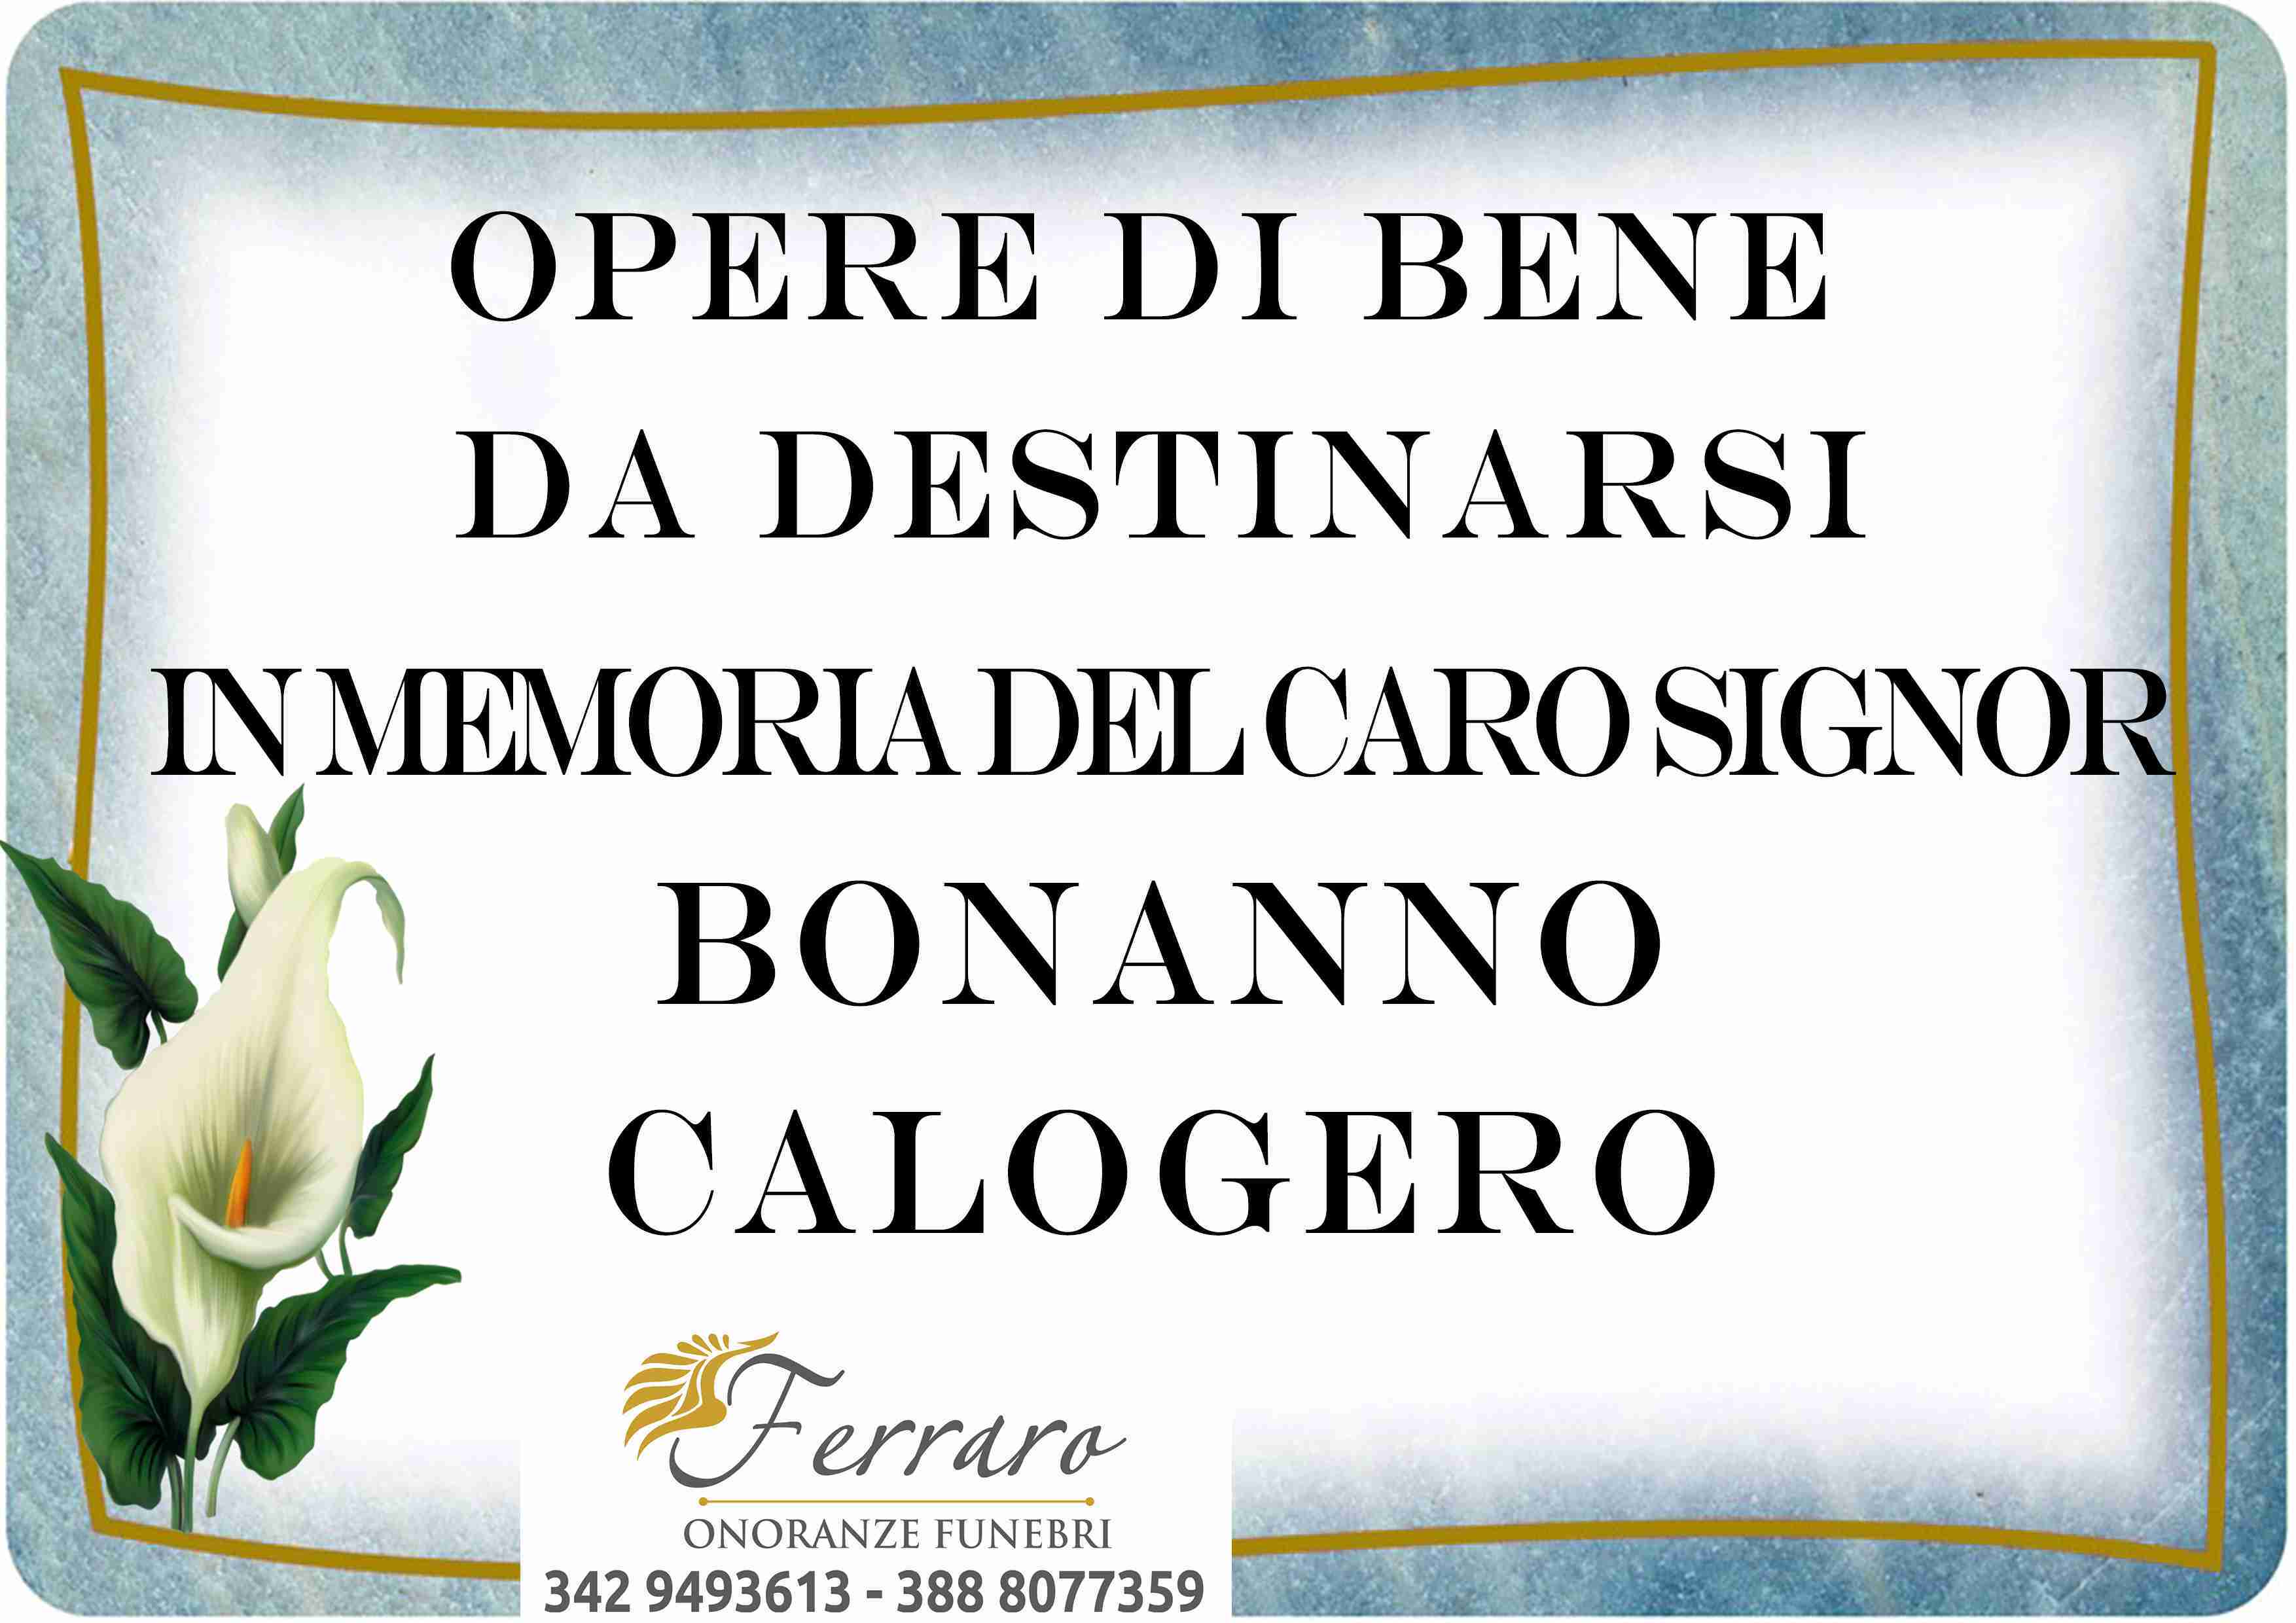 Calogero Bonanno